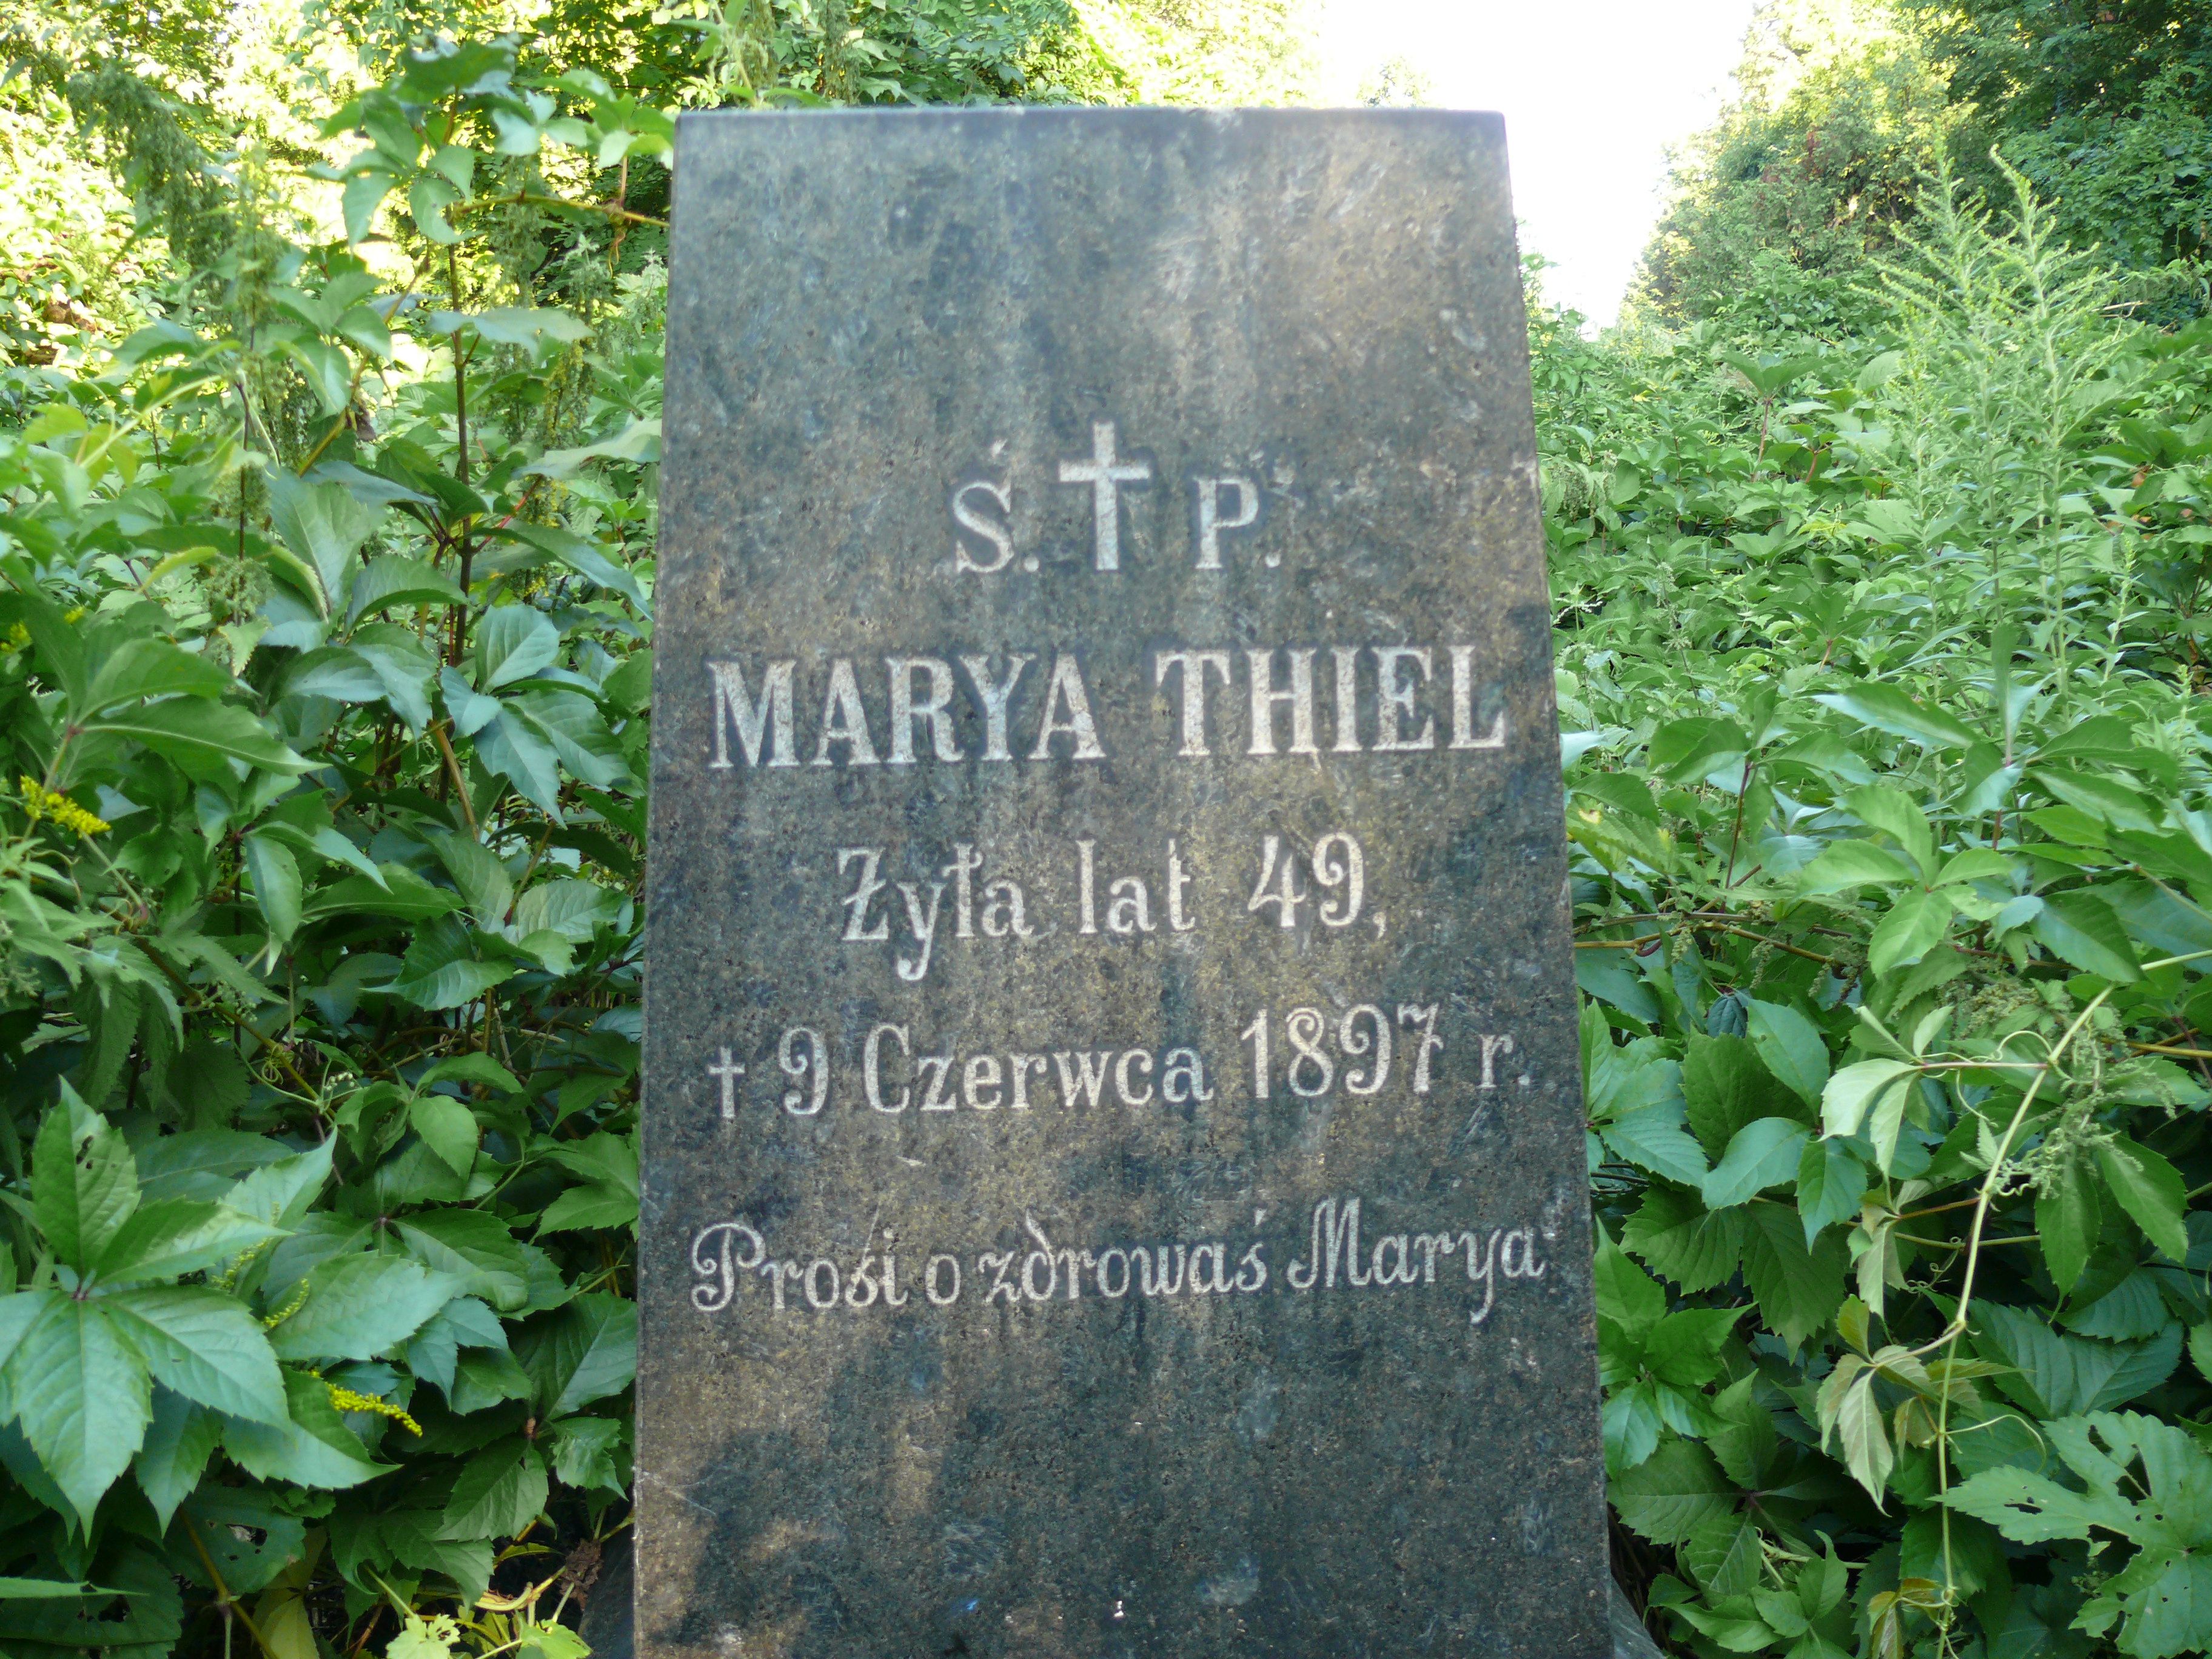 Gravestone inscription of Maria Thiel